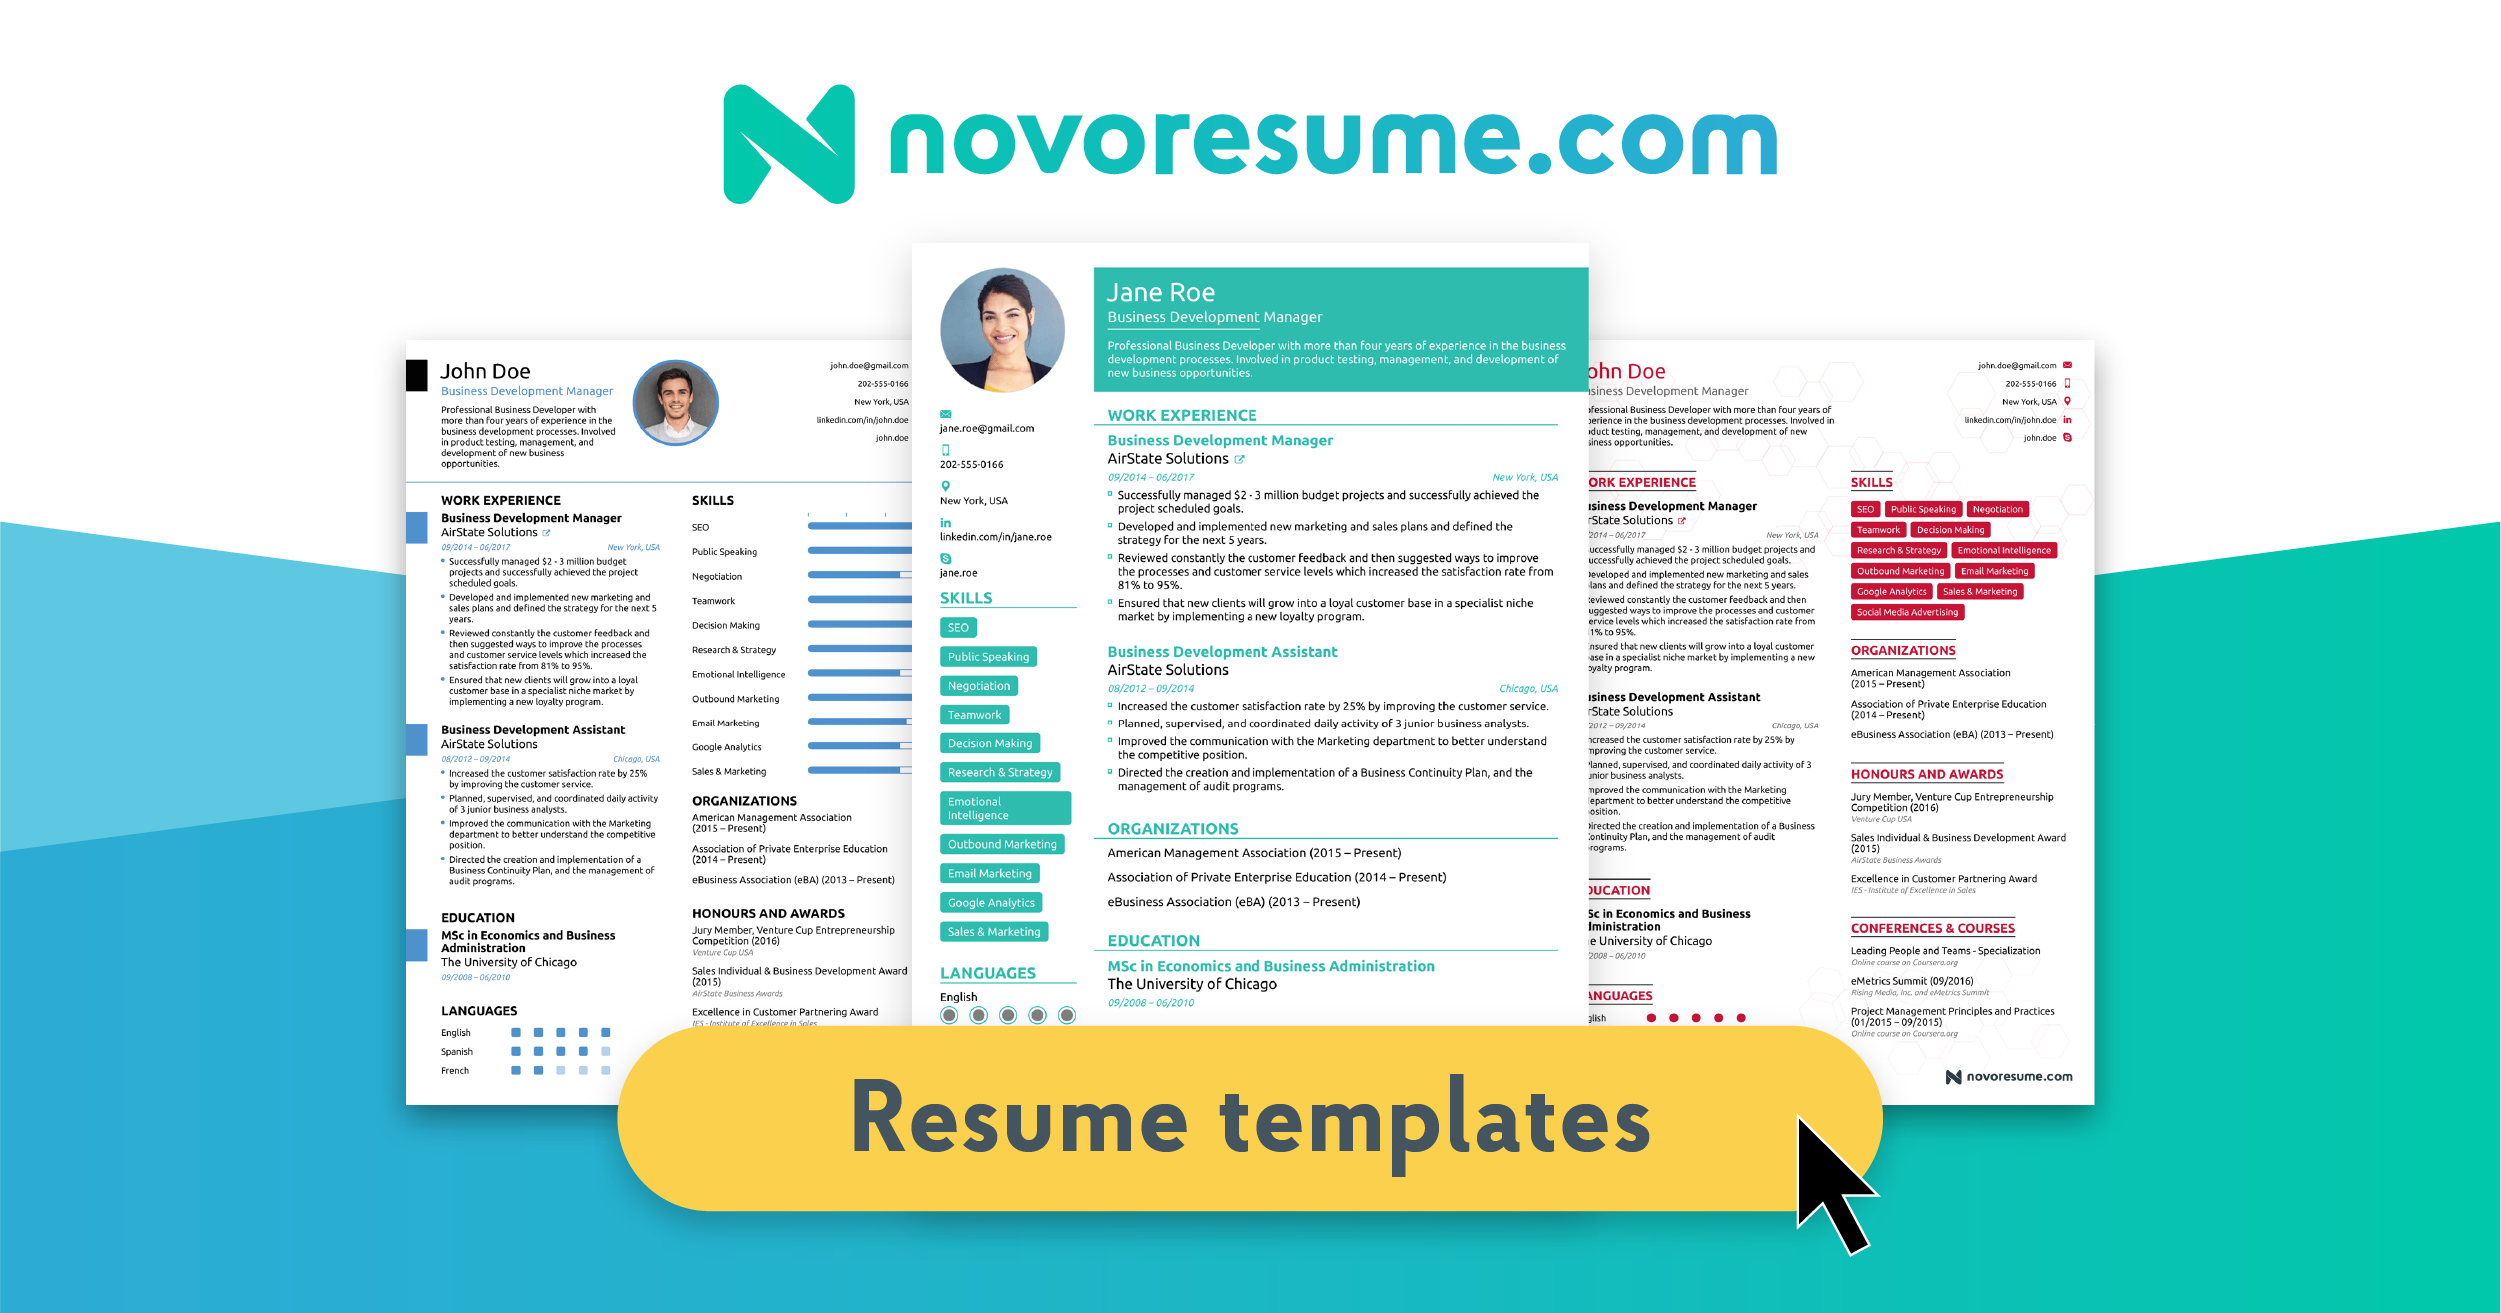 New Resume Format from novoresume.com